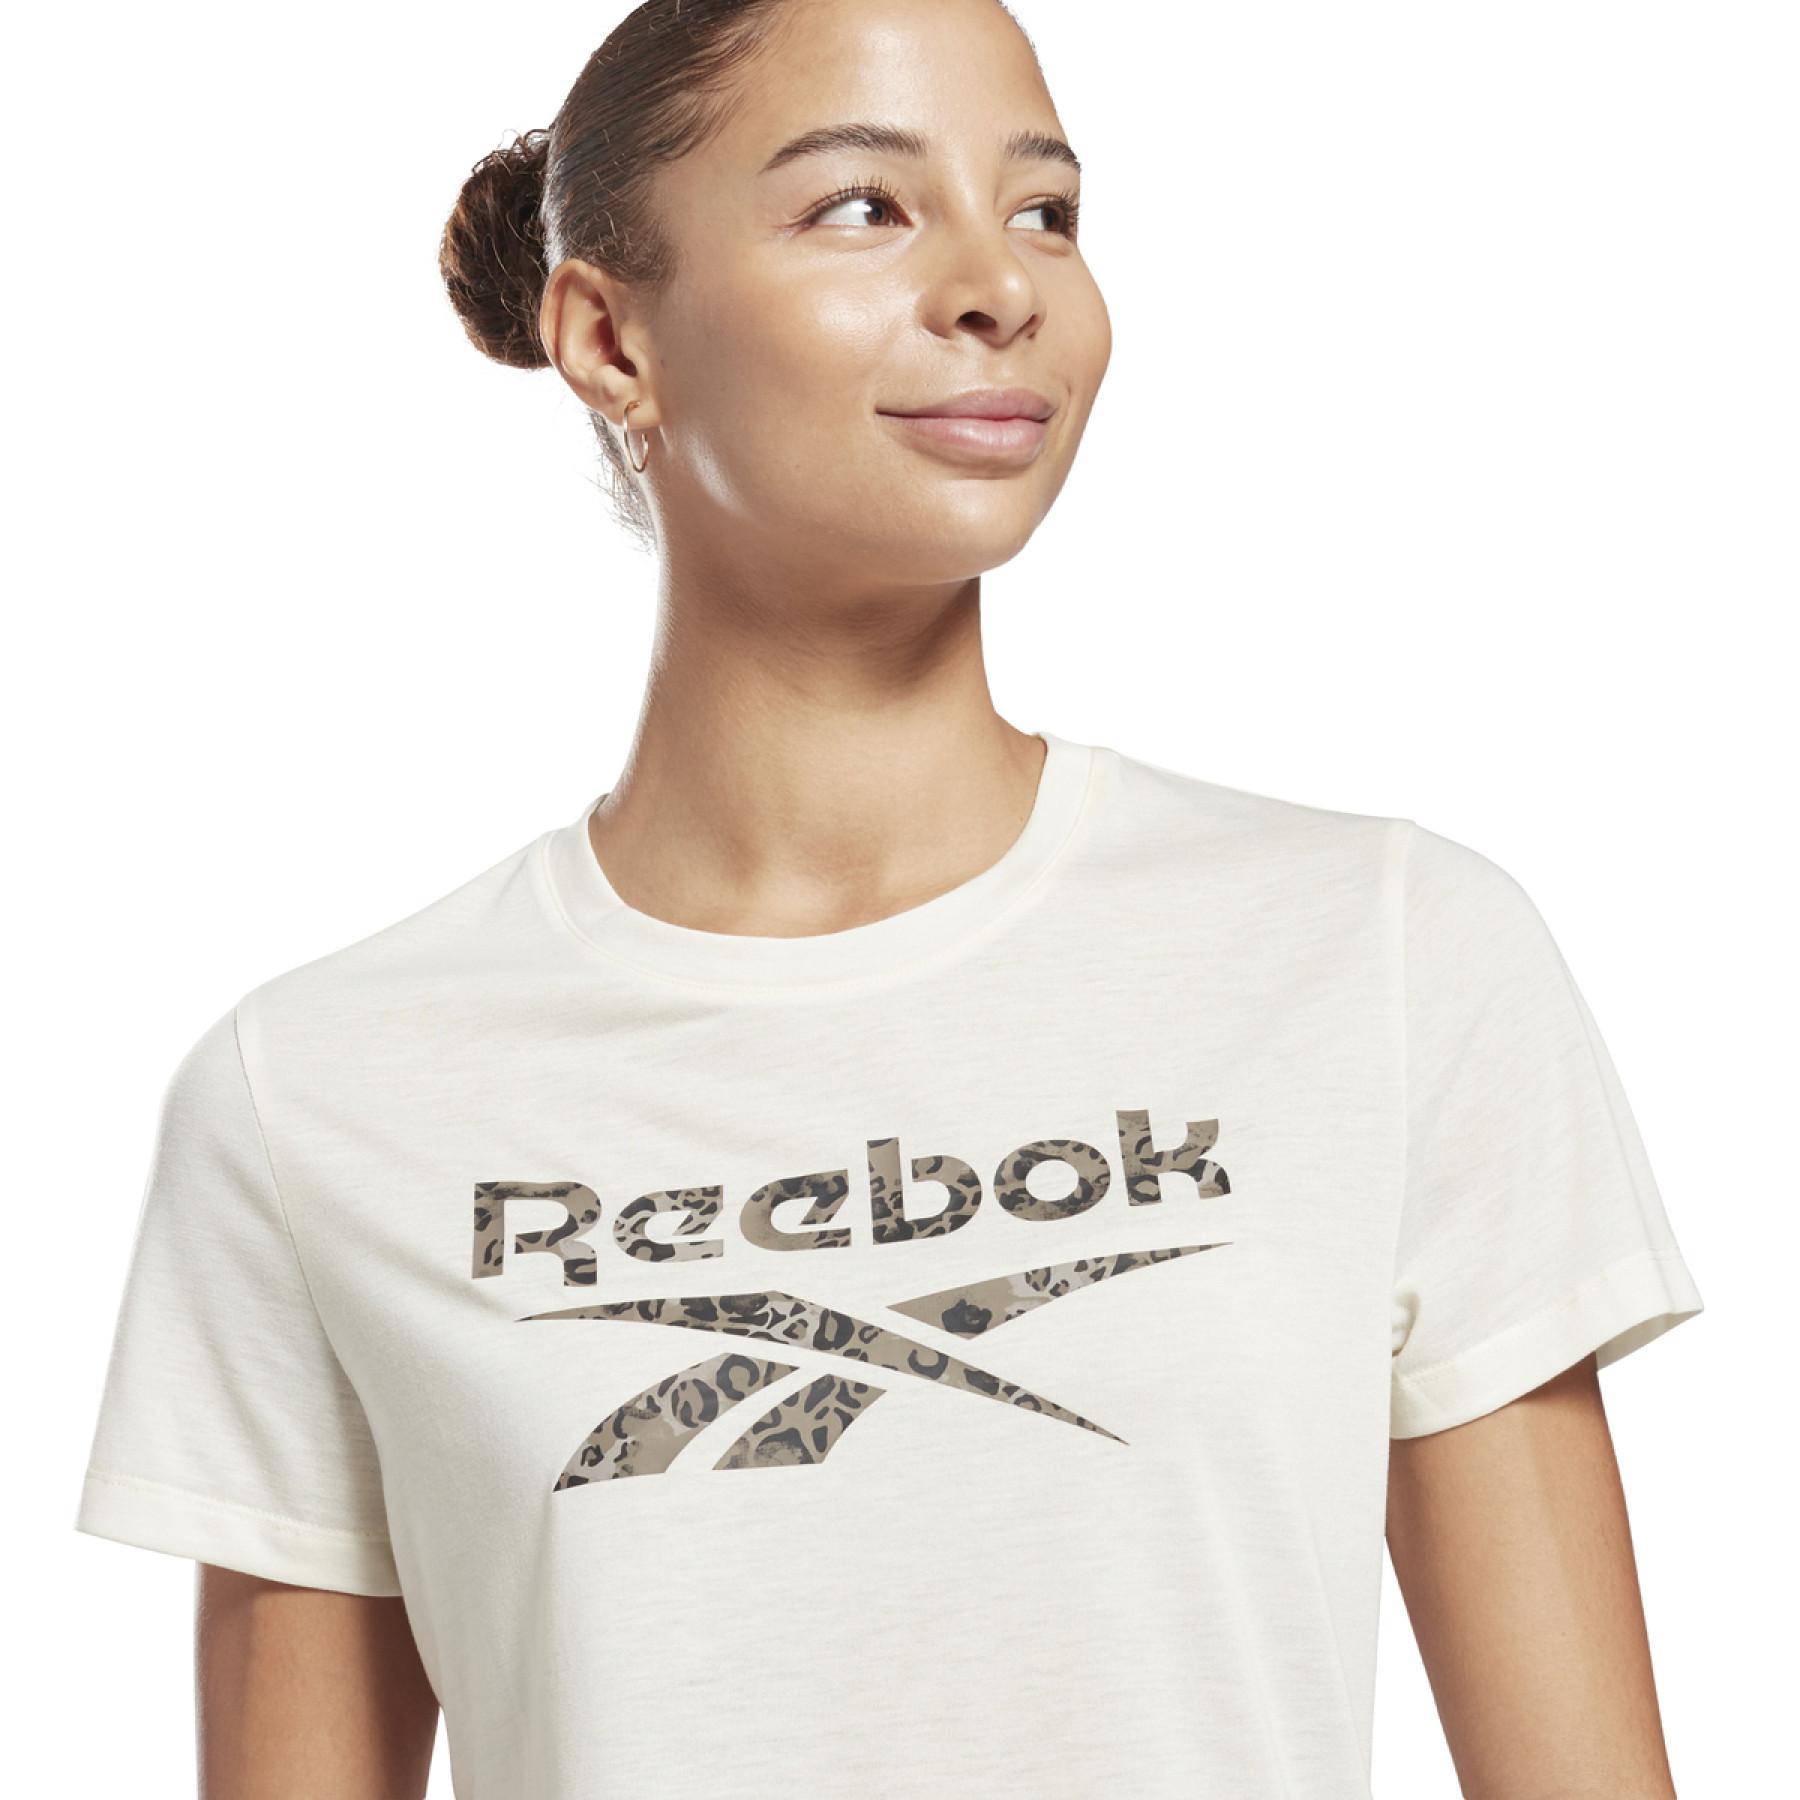 T-shirt femme Reebok Modern Safari Logo